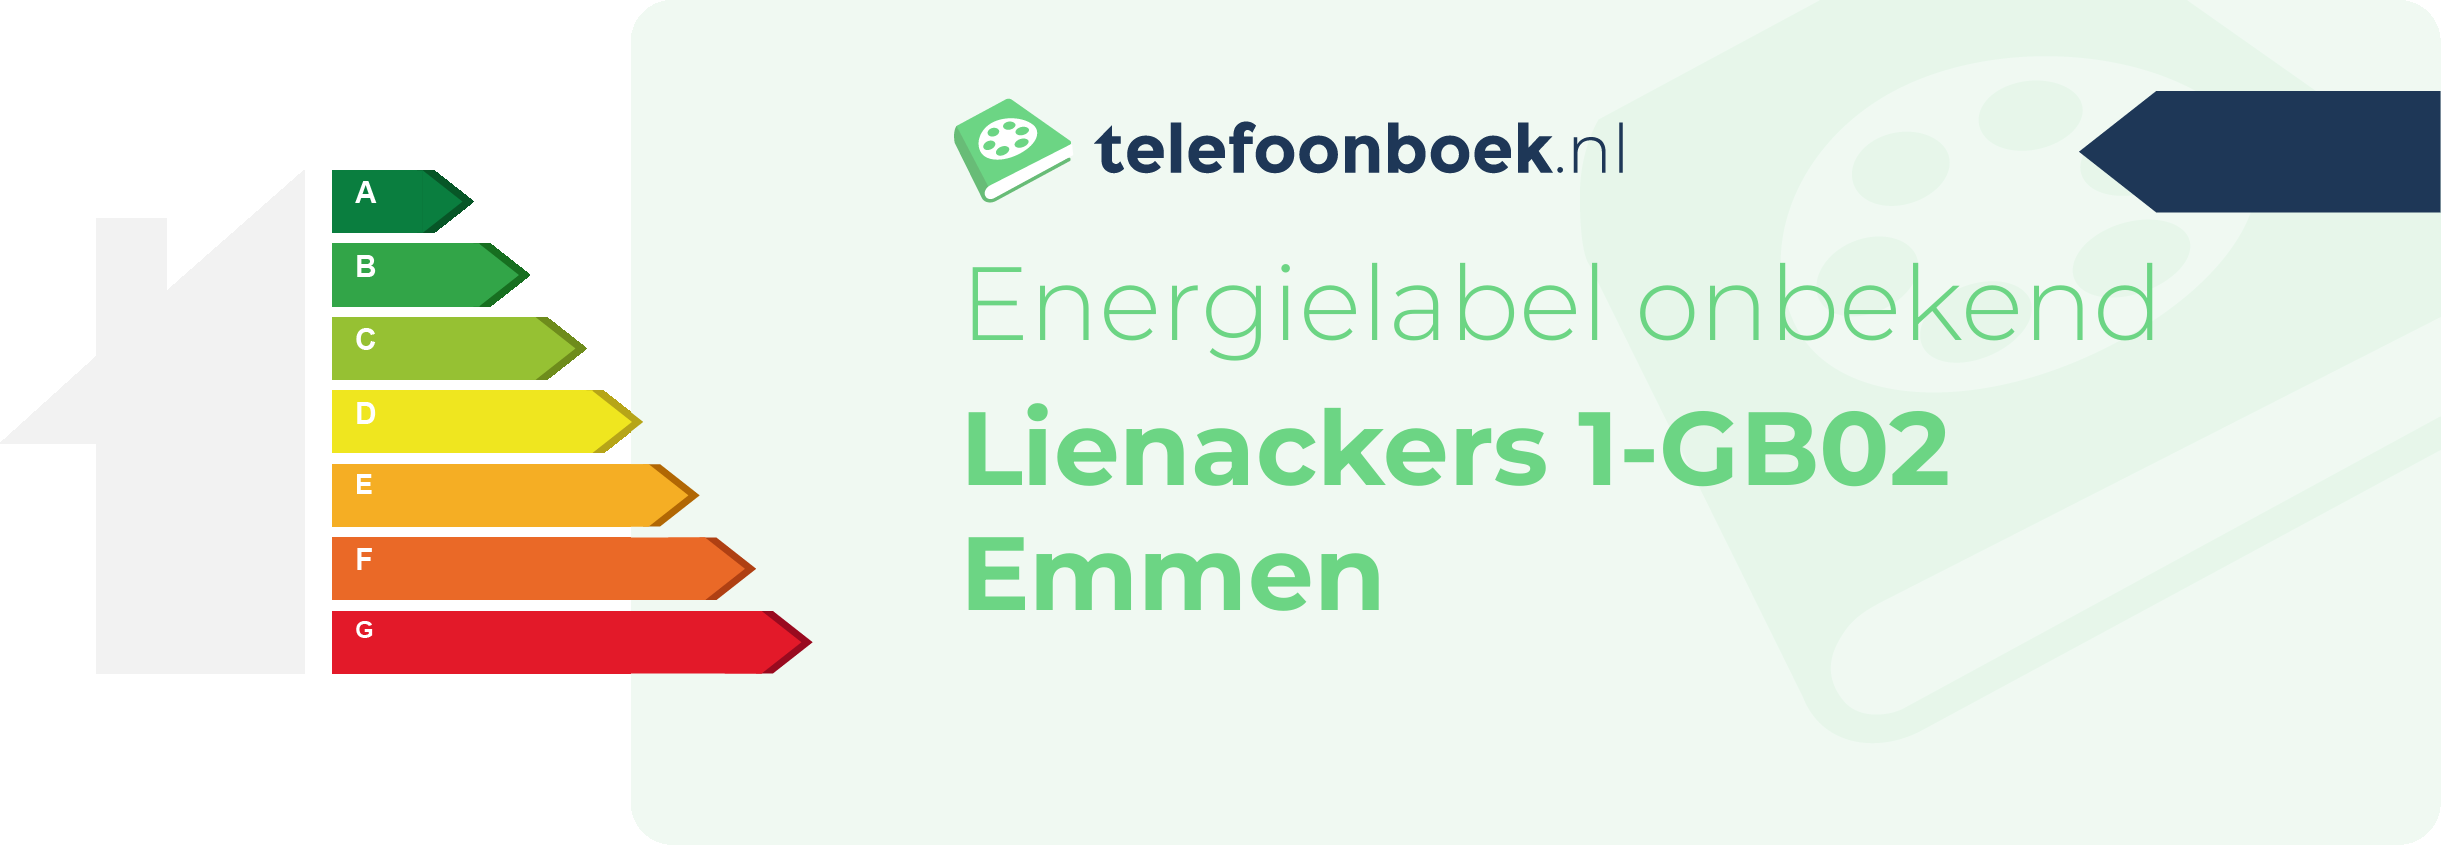 Energielabel Lienackers 1-GB02 Emmen